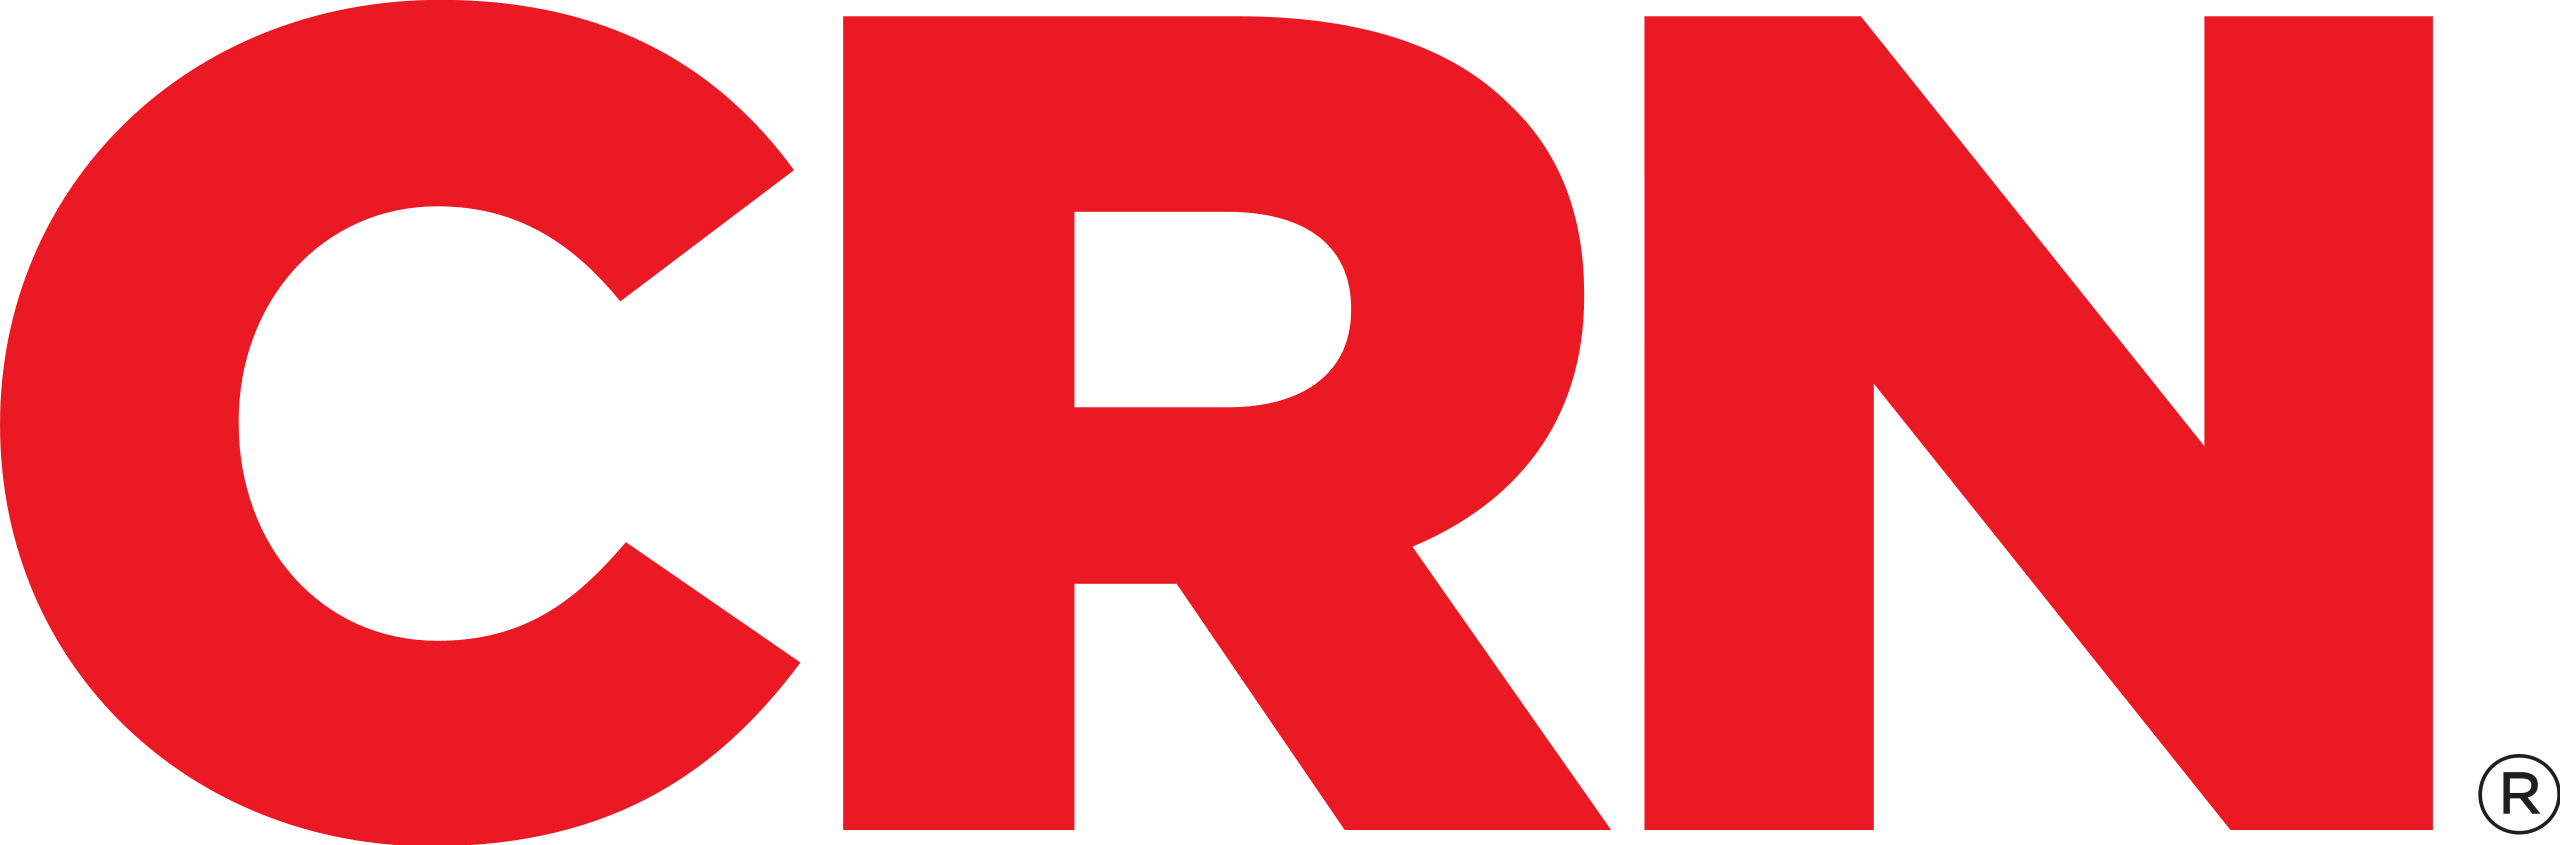 original publisher logo